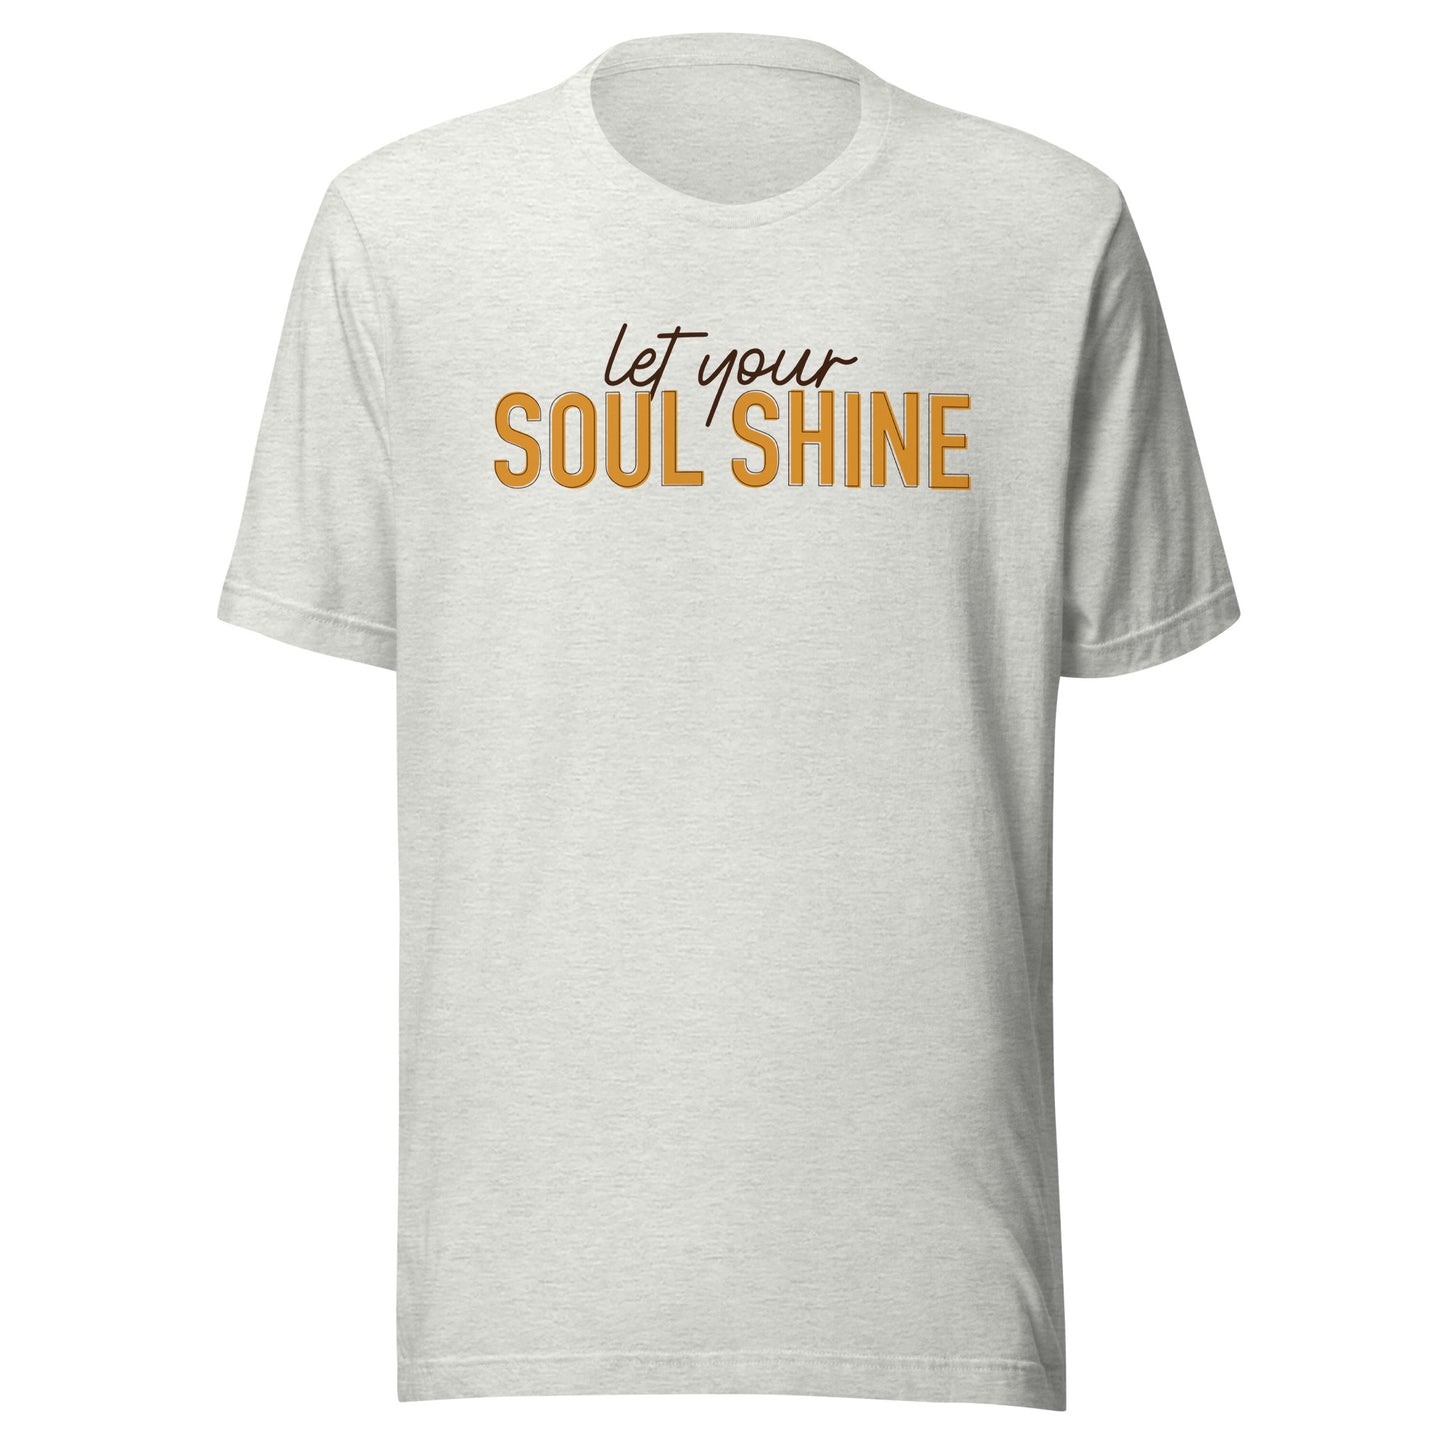 Let Your Soul Shine!